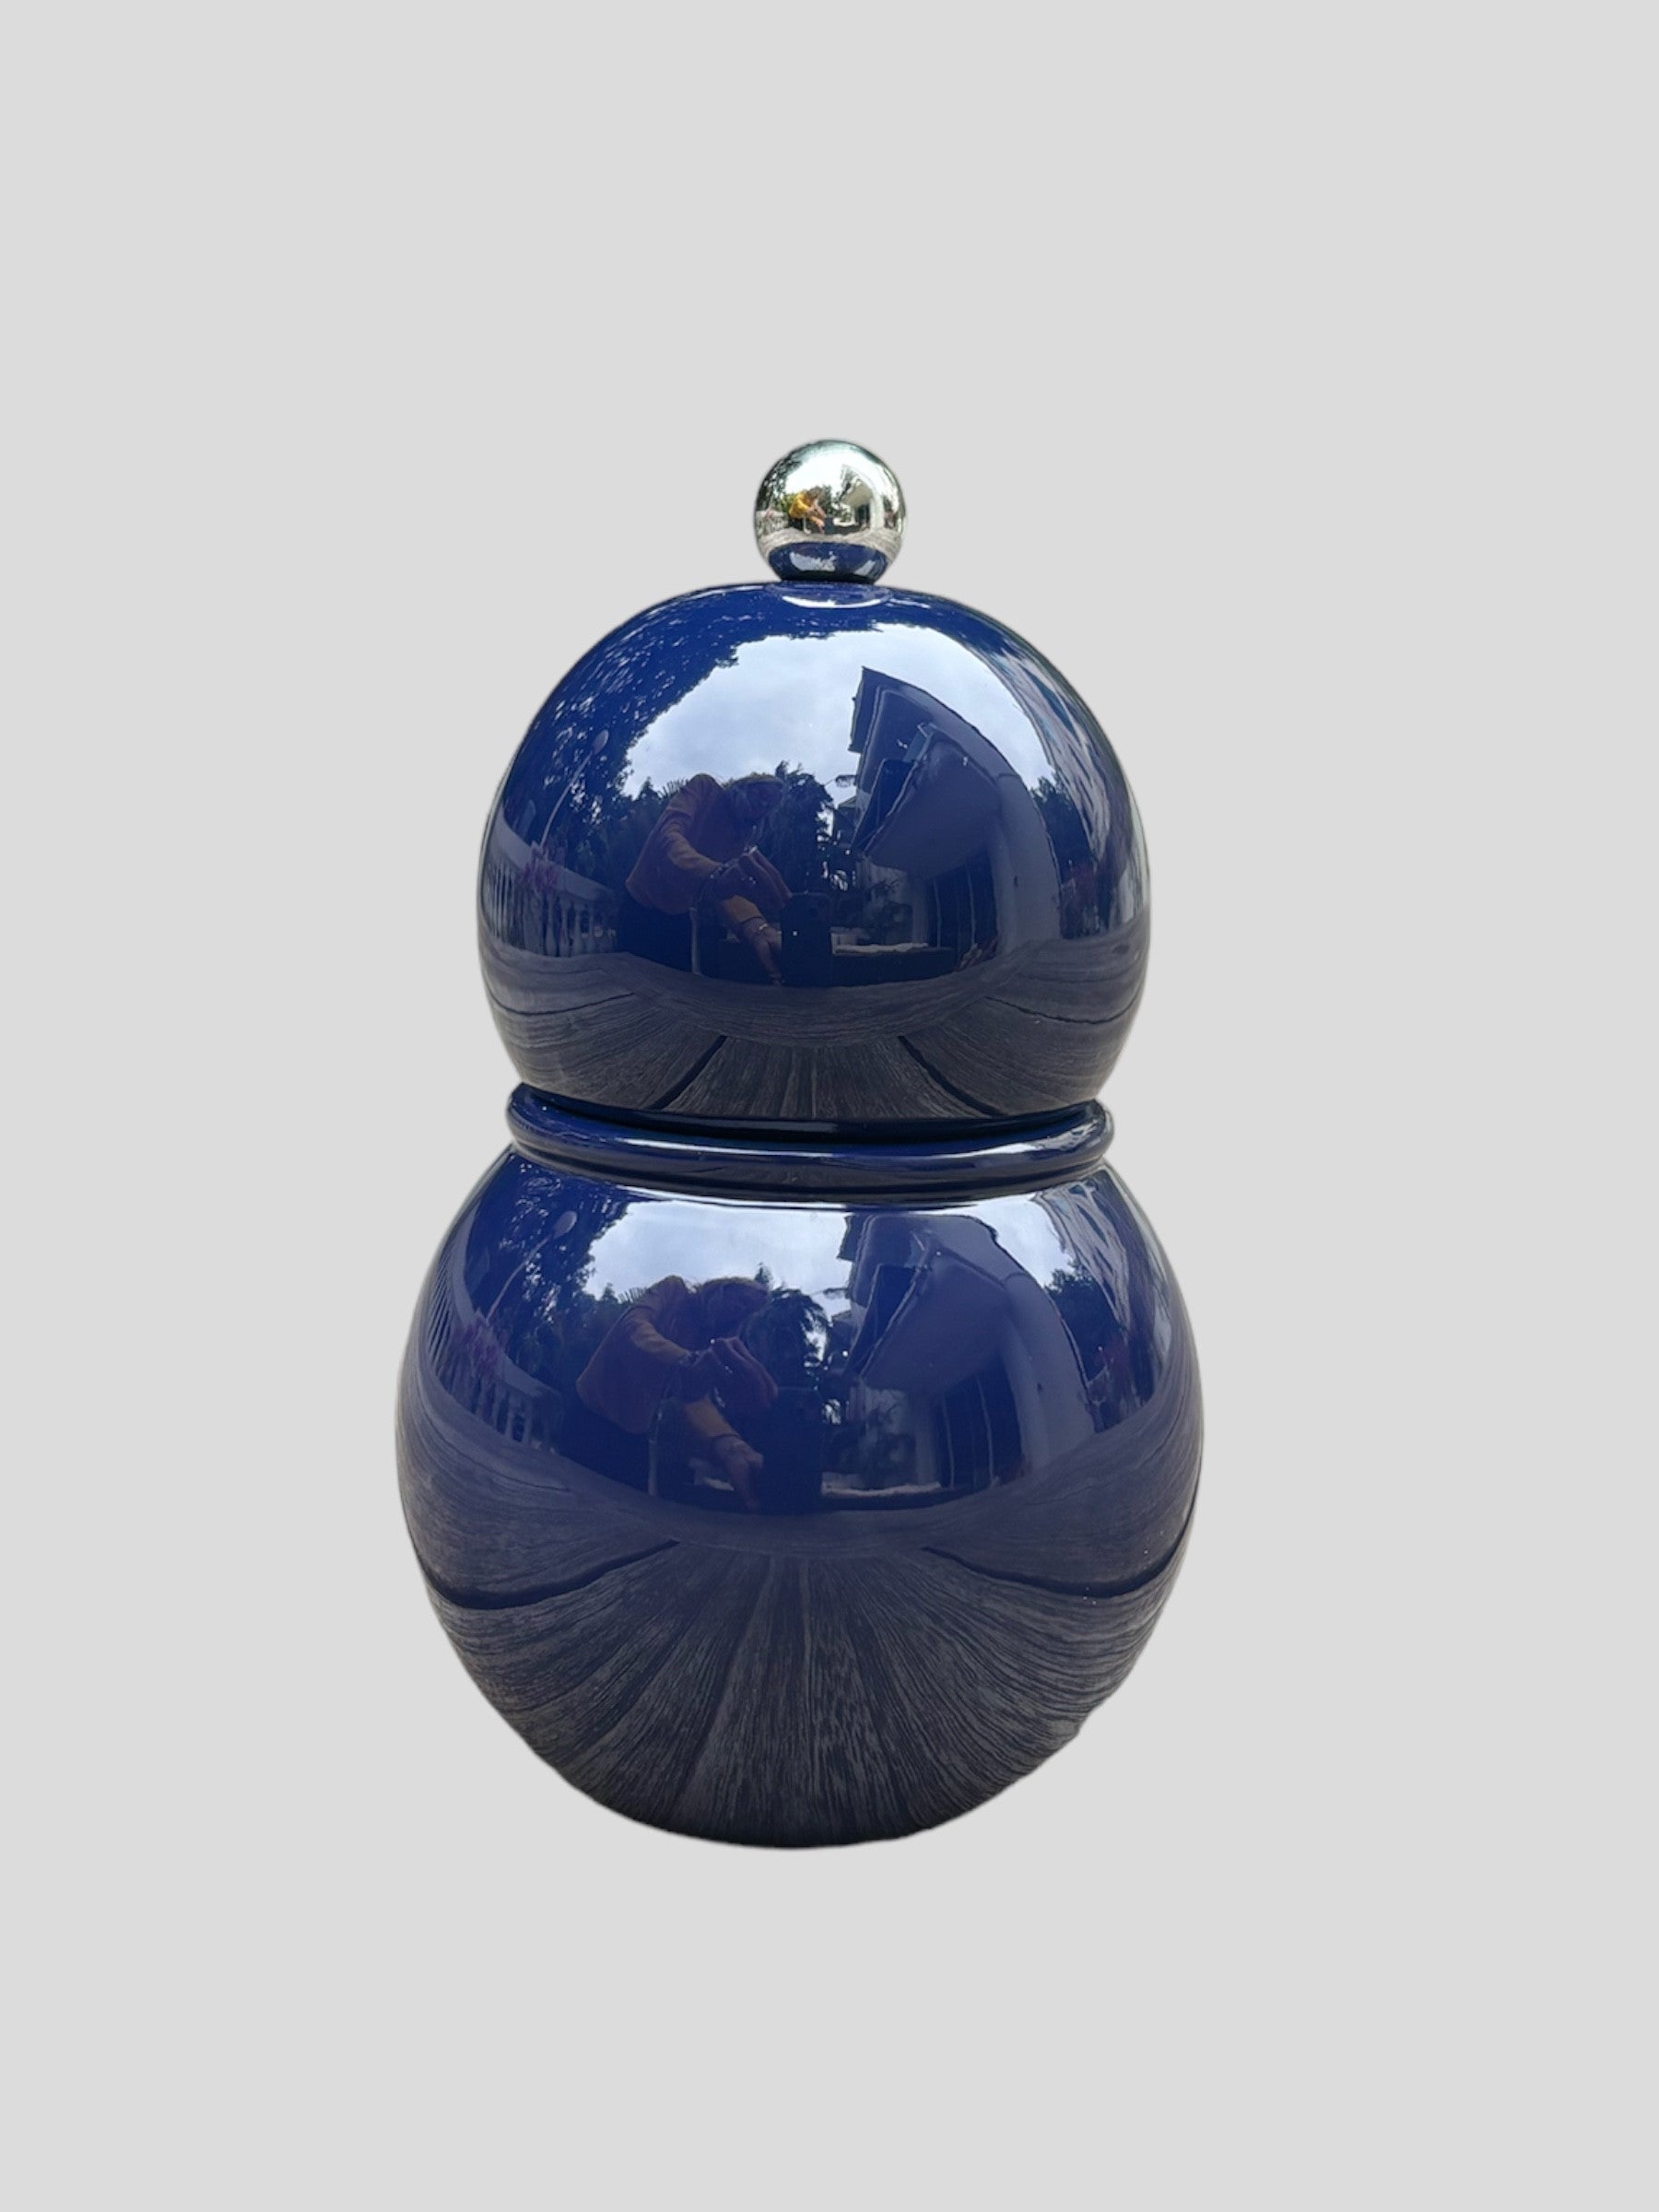 short, navy, bobbin shaped pepper grinder from Addison Ross.